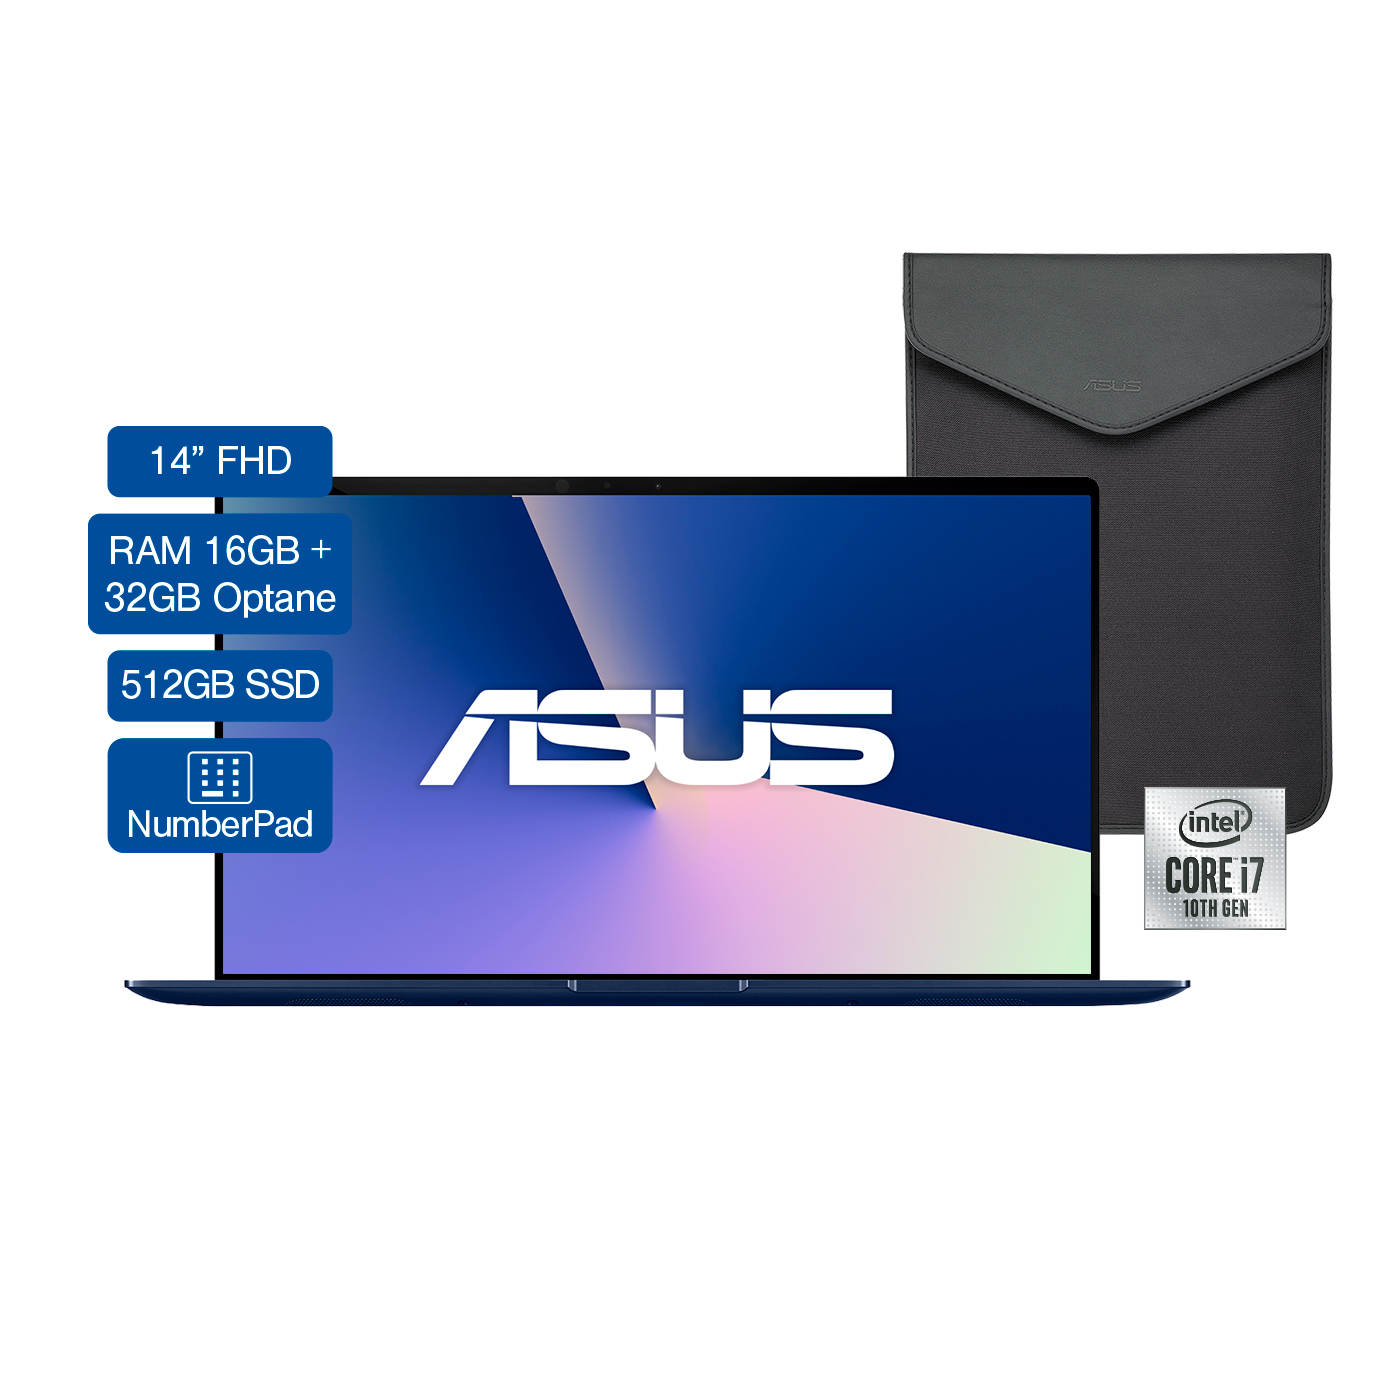 Computador Portátil ASUS Zenbook 14" Pulgadas UX433FAC-A5325TS Procesador Intel Core i7 RAM 16GB + 32GB Intel Optane Disco Estado Sólido 512GB-Azul